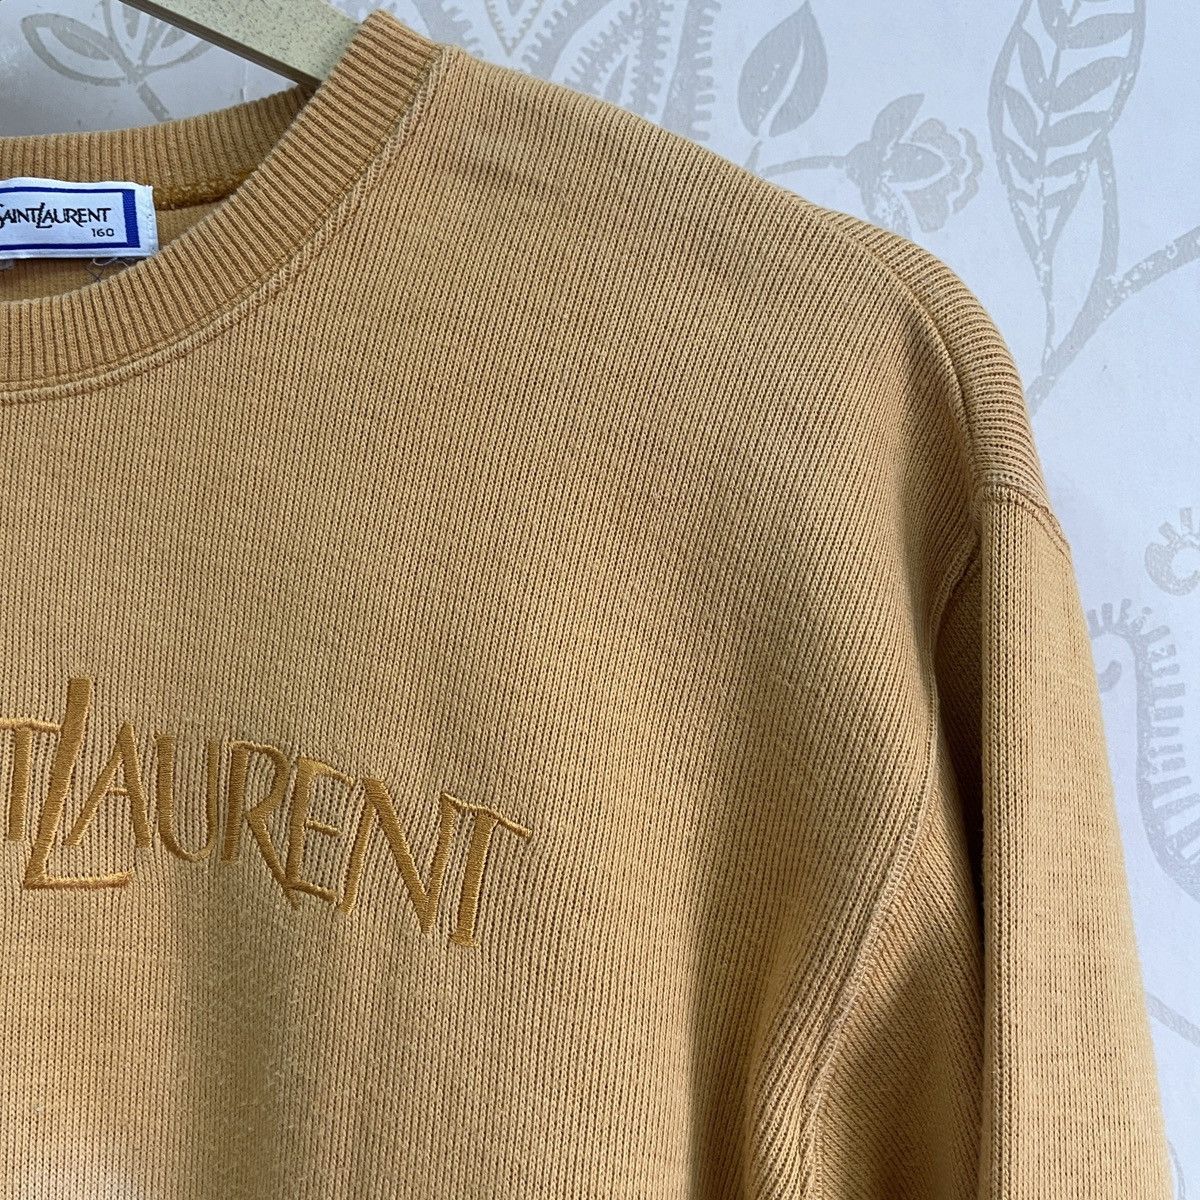 Sun Faded Vintage Yves Saint Laurent Sweater - 7